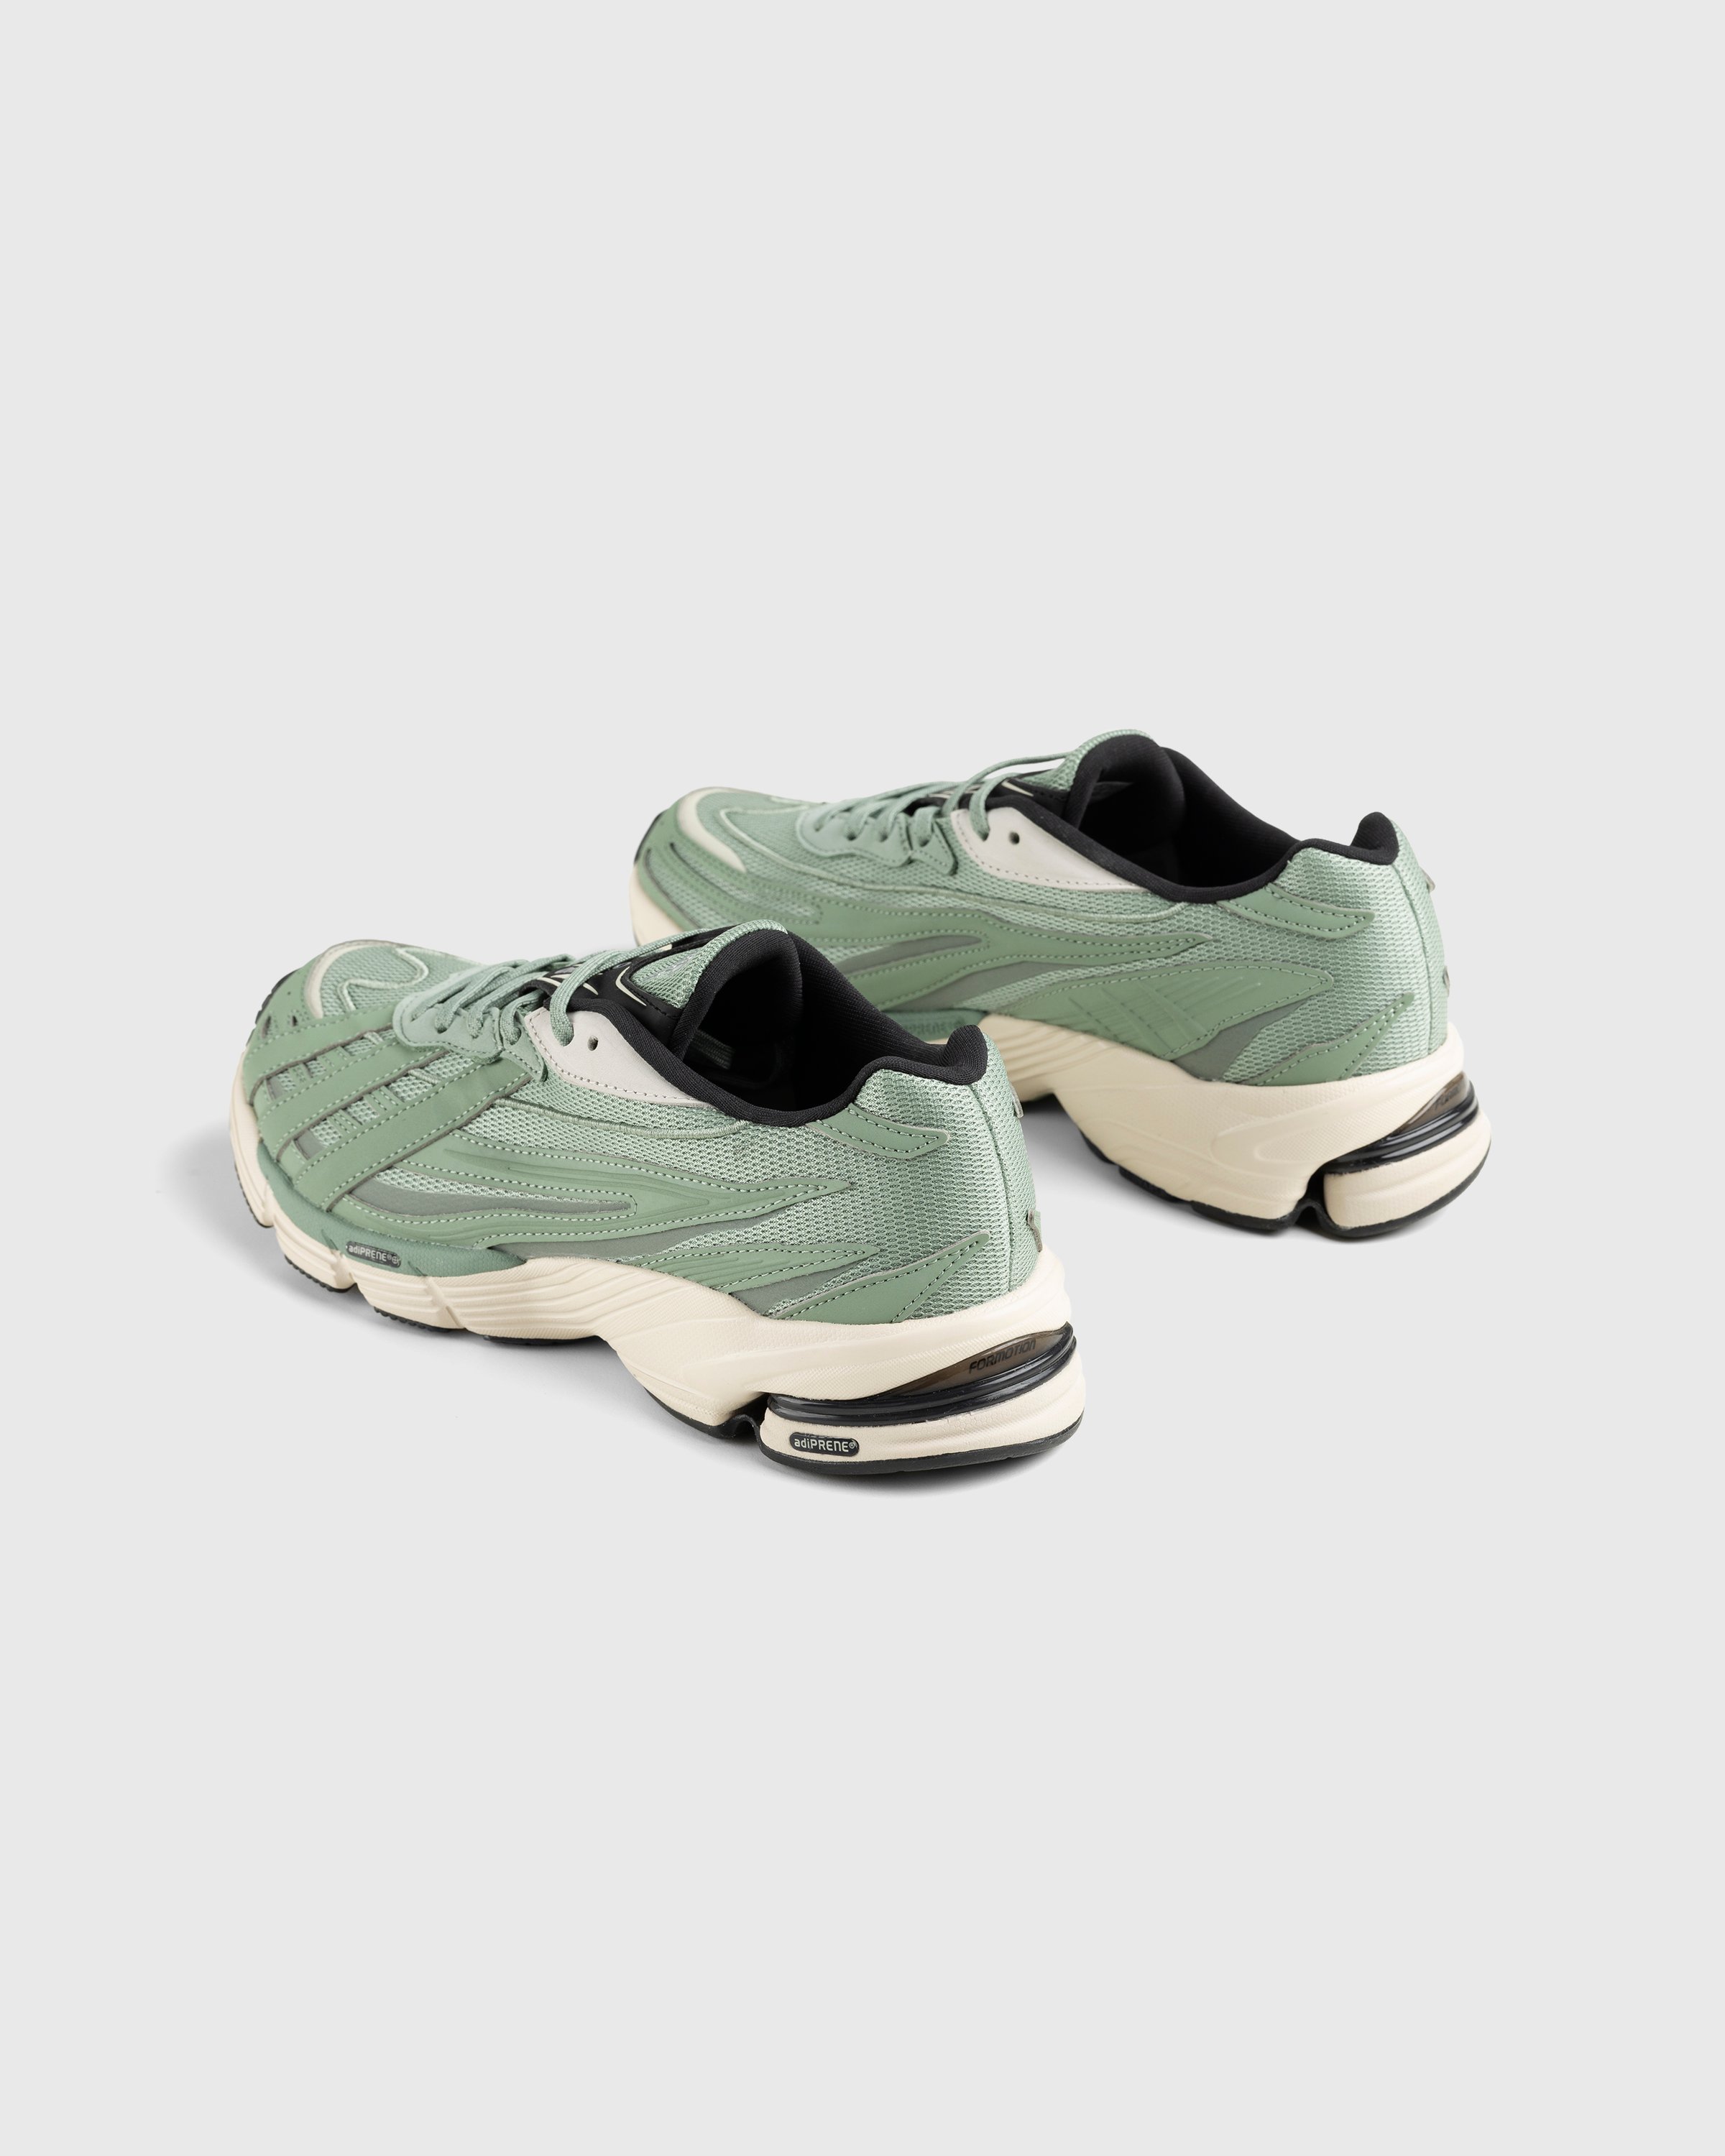 Adidas - Orketro Green/Black/Aluminum - Footwear - Green - Image 4